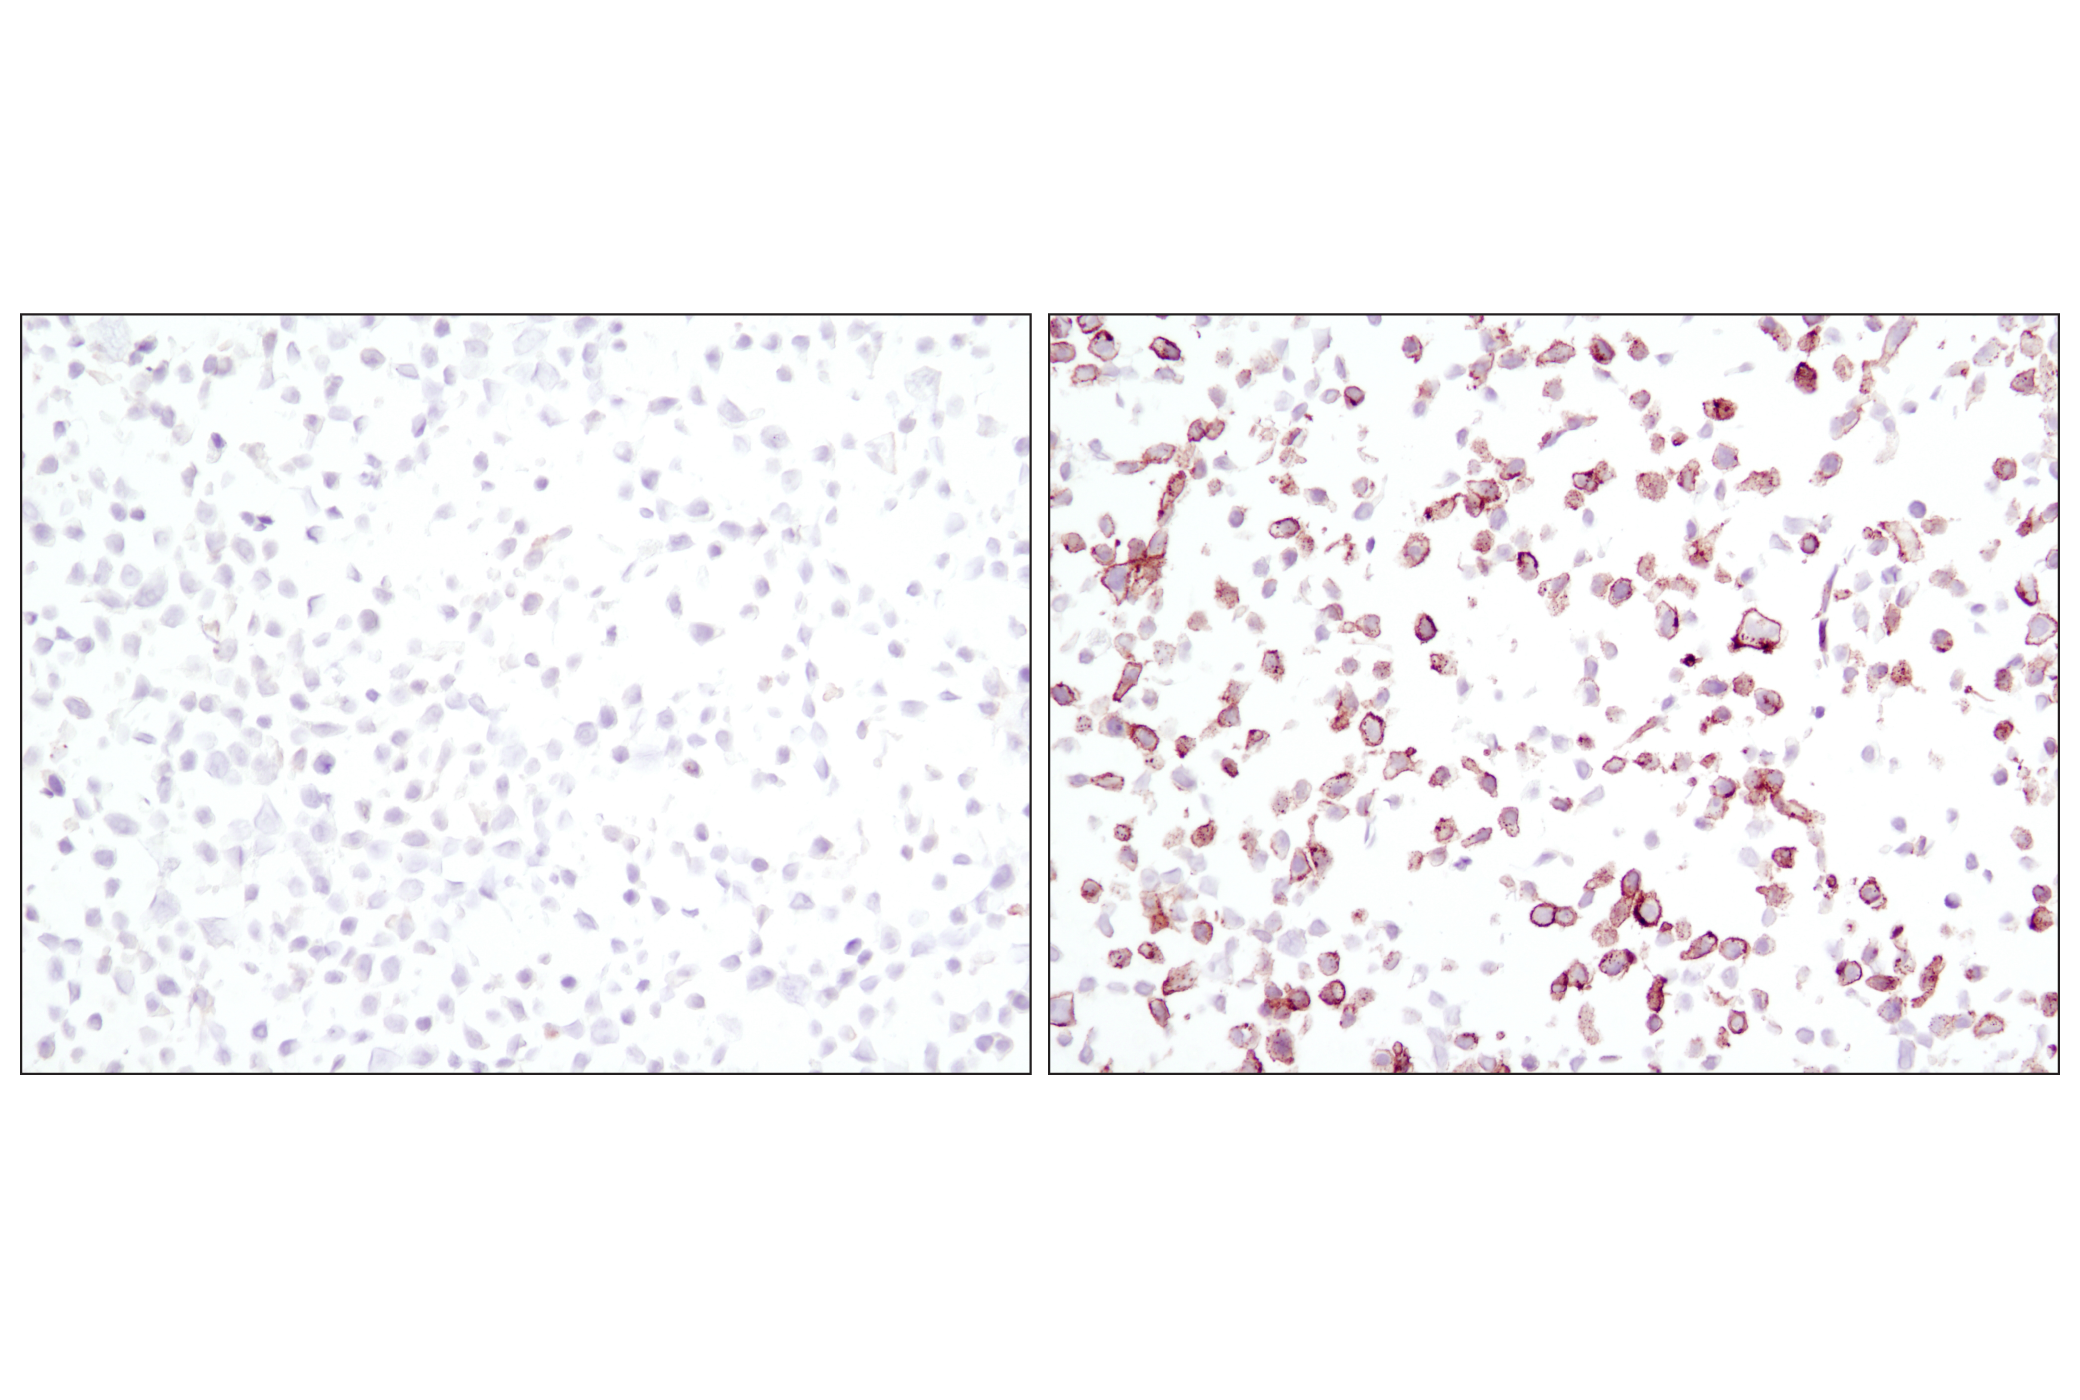  Image 8: PhosphoPlus® EGFR (Tyr1068) Antibody Duet